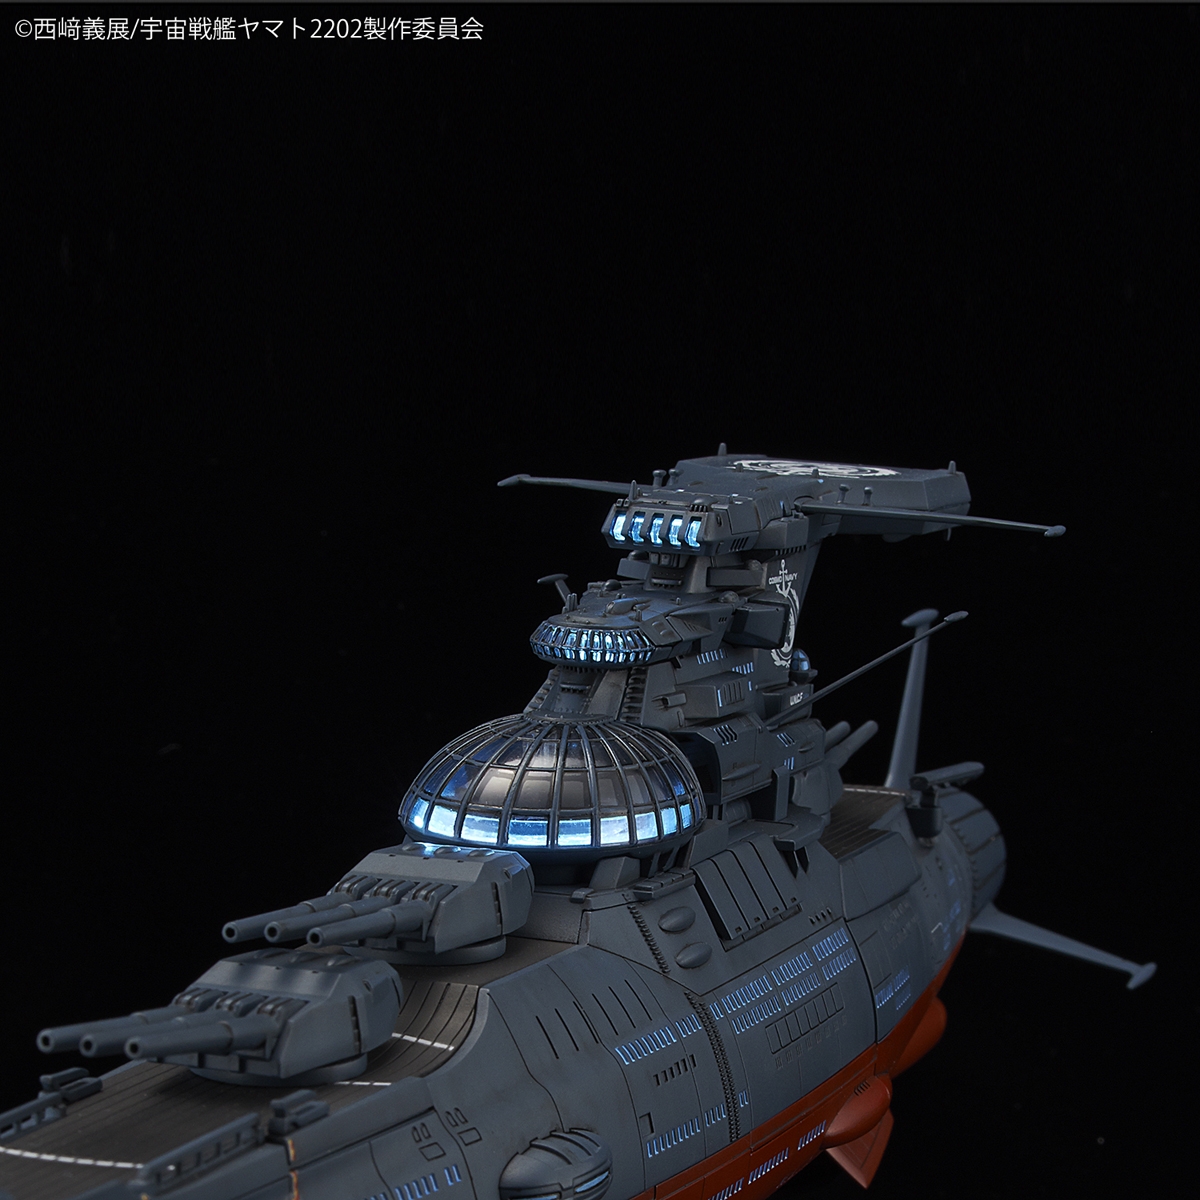 Bandai Yamato Experimental Ship of Transcendental Dimension Ginga 1/1000 Scale 